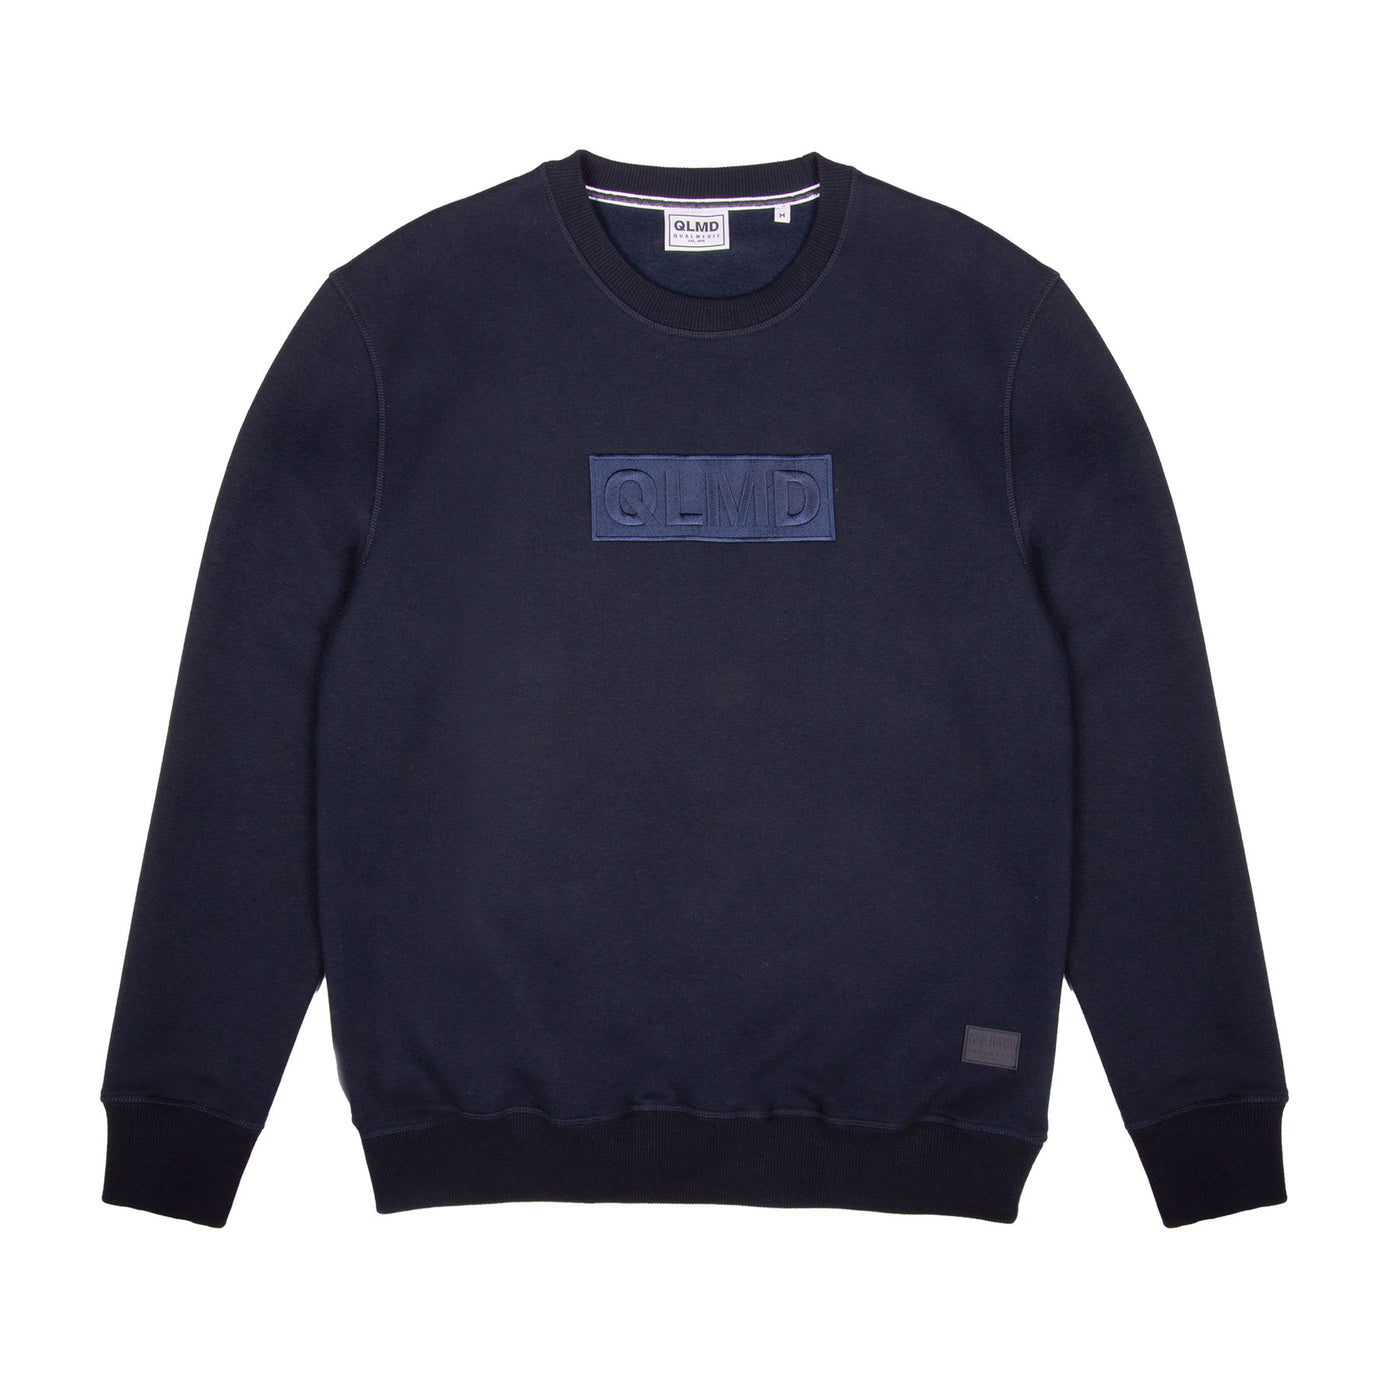 QLMD Sweater Stick Aufnäher dunkelblau